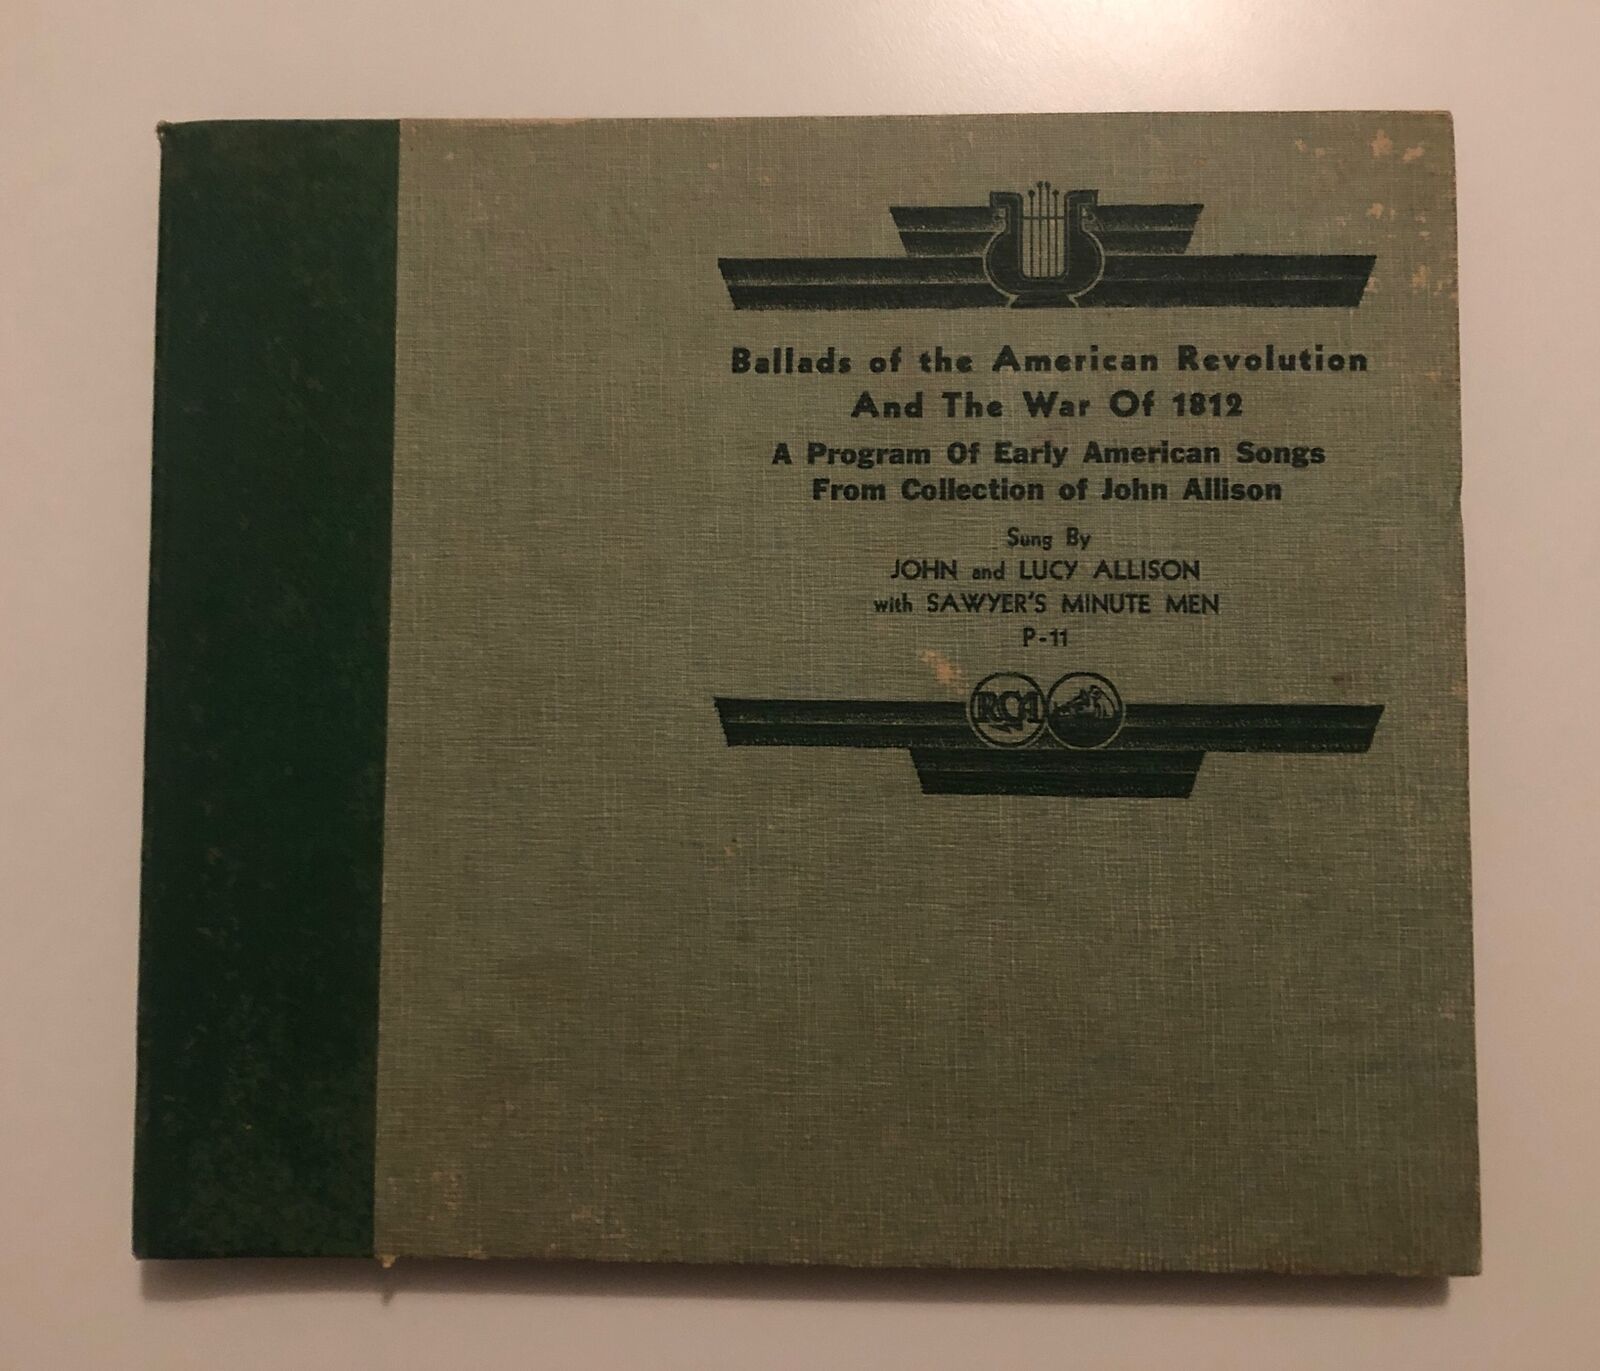 Ballads of American revolution war of 1812 john lucy allison 78 RPM Shellac RCA